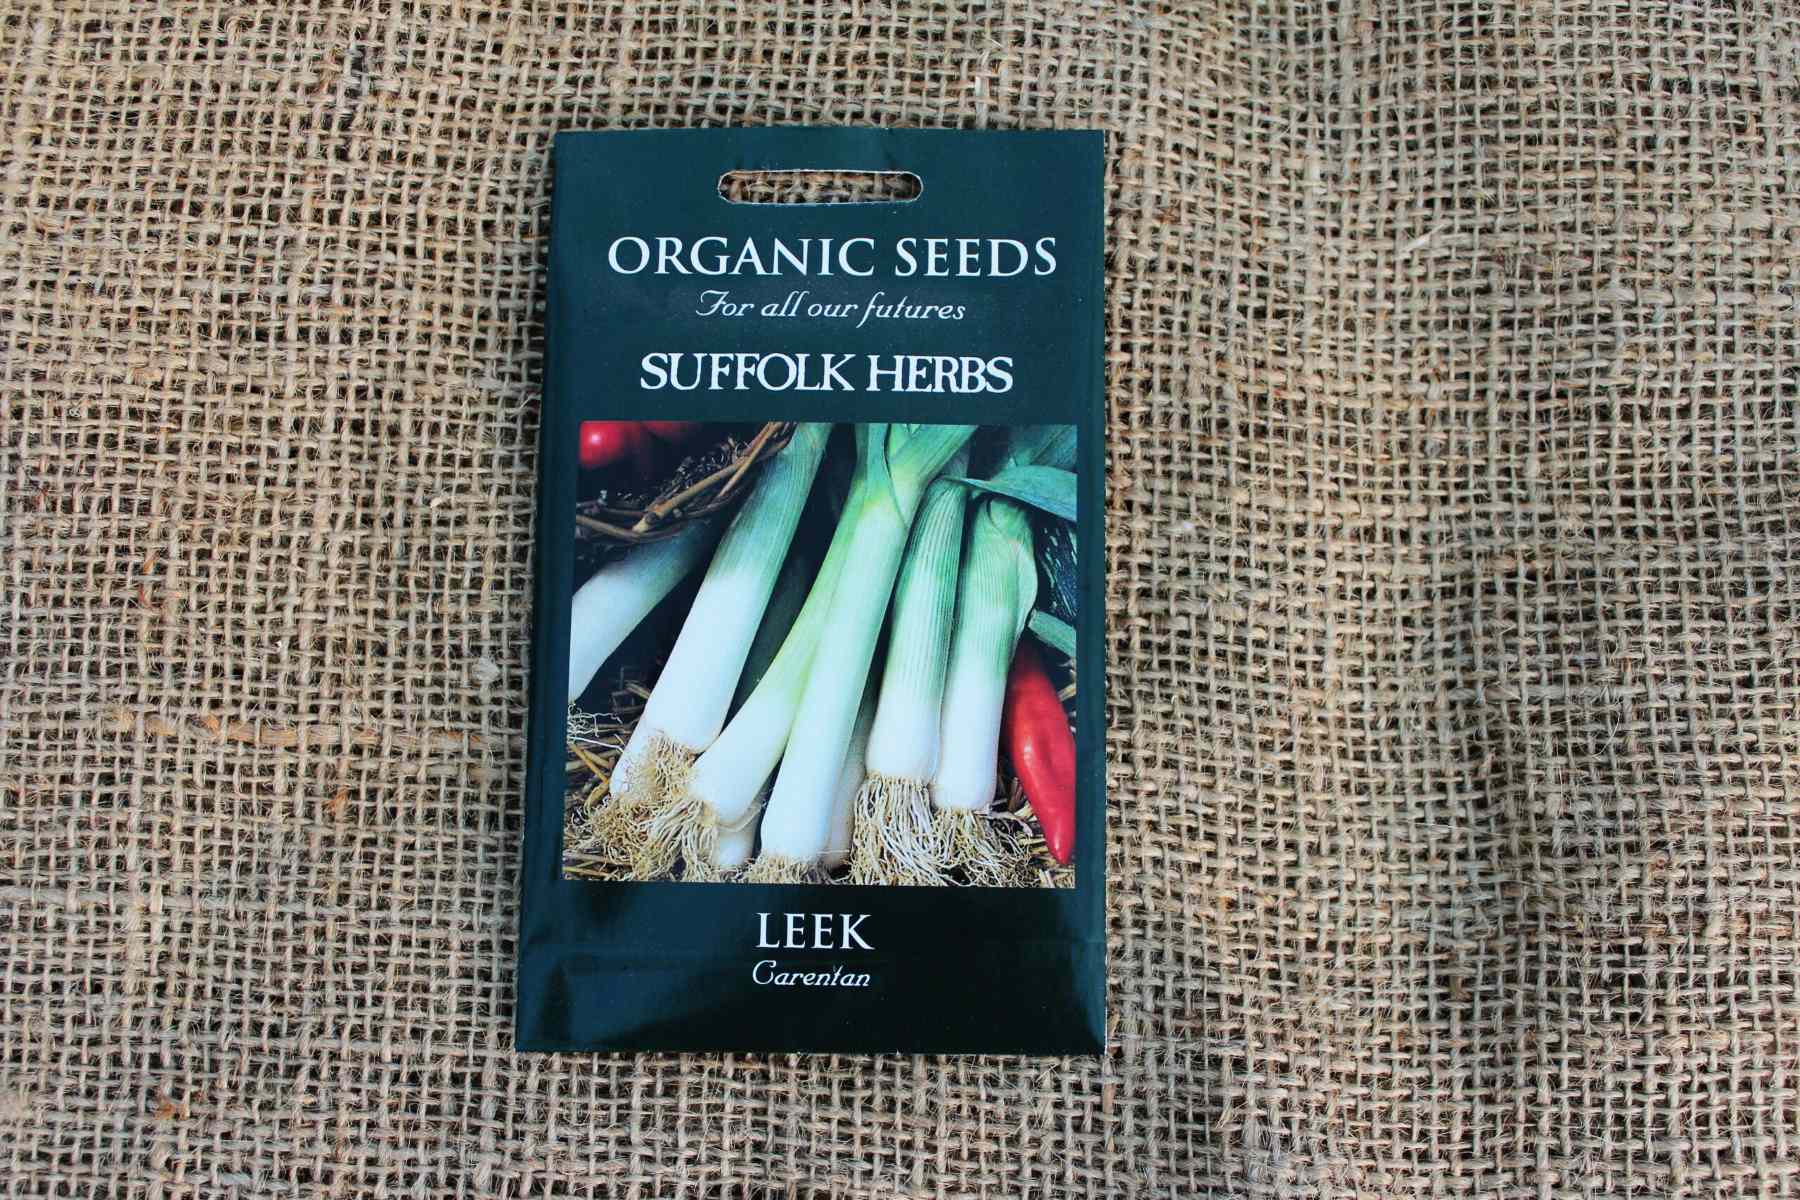 How To Harvest Leek Seeds